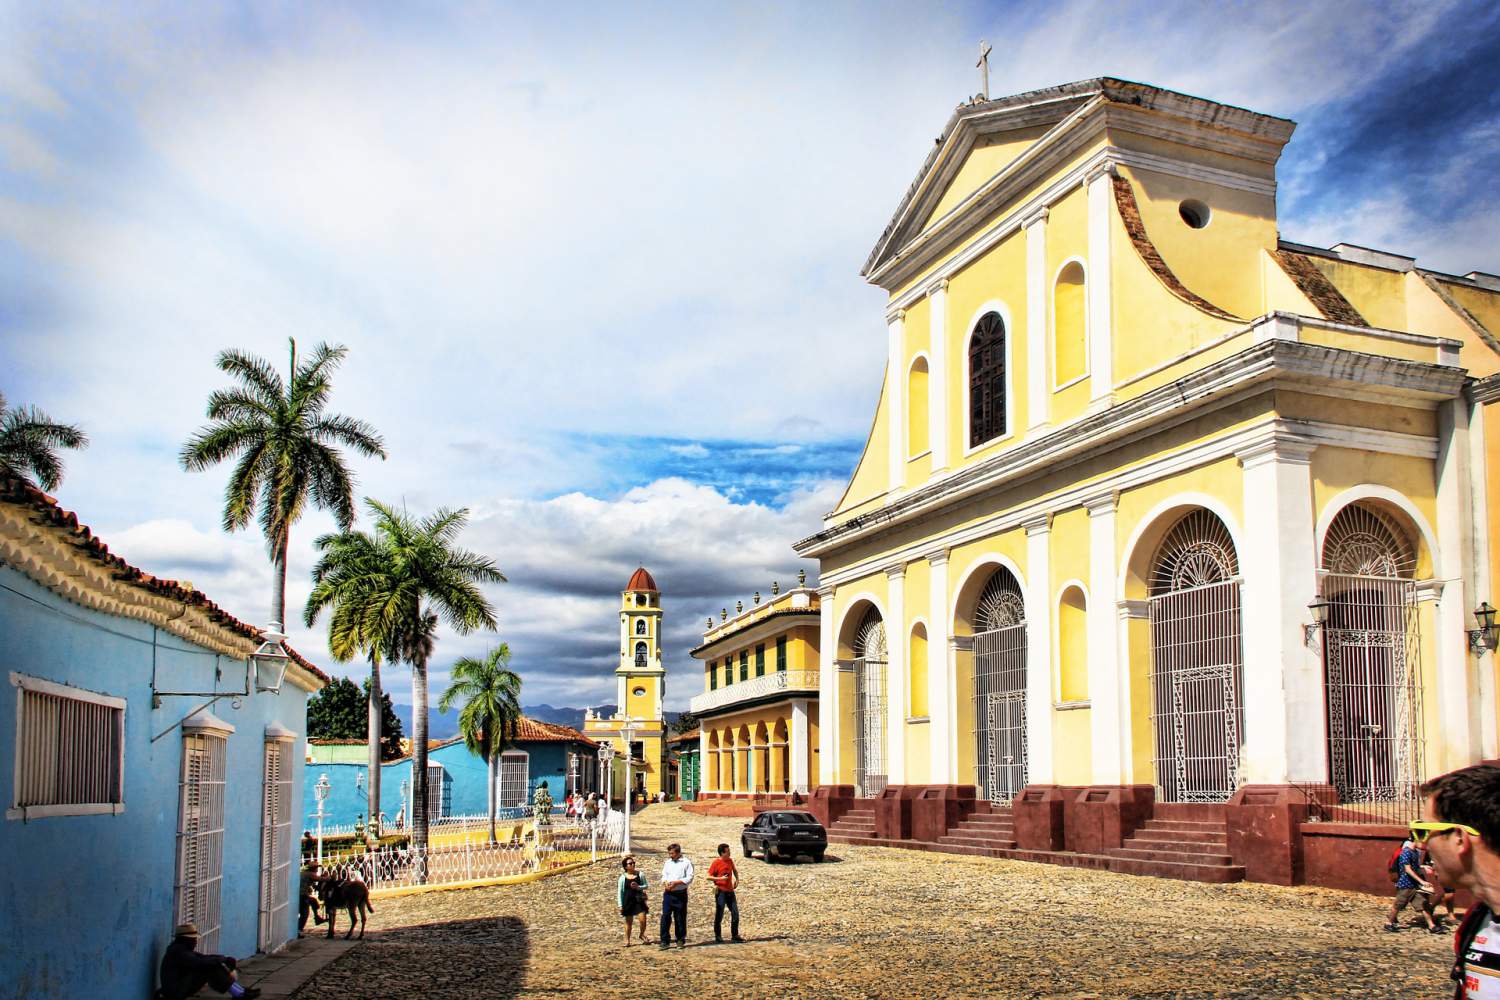 Caribbean architecture in Trinidad, Cuba